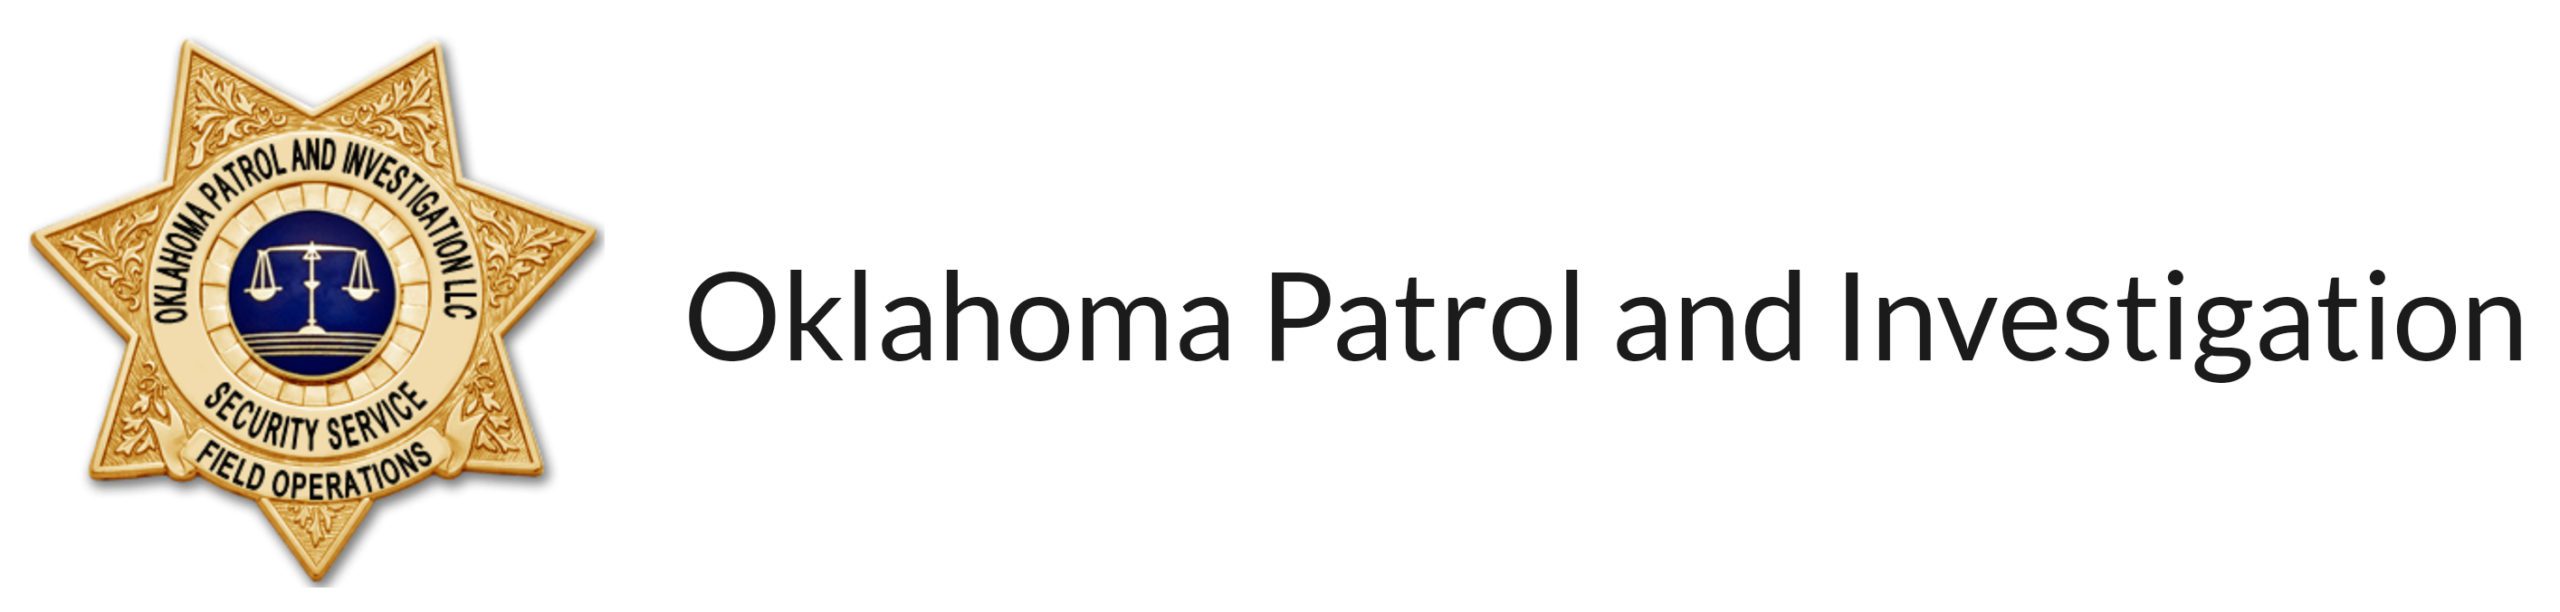 Oklahoma Patrol and Investigation Logo